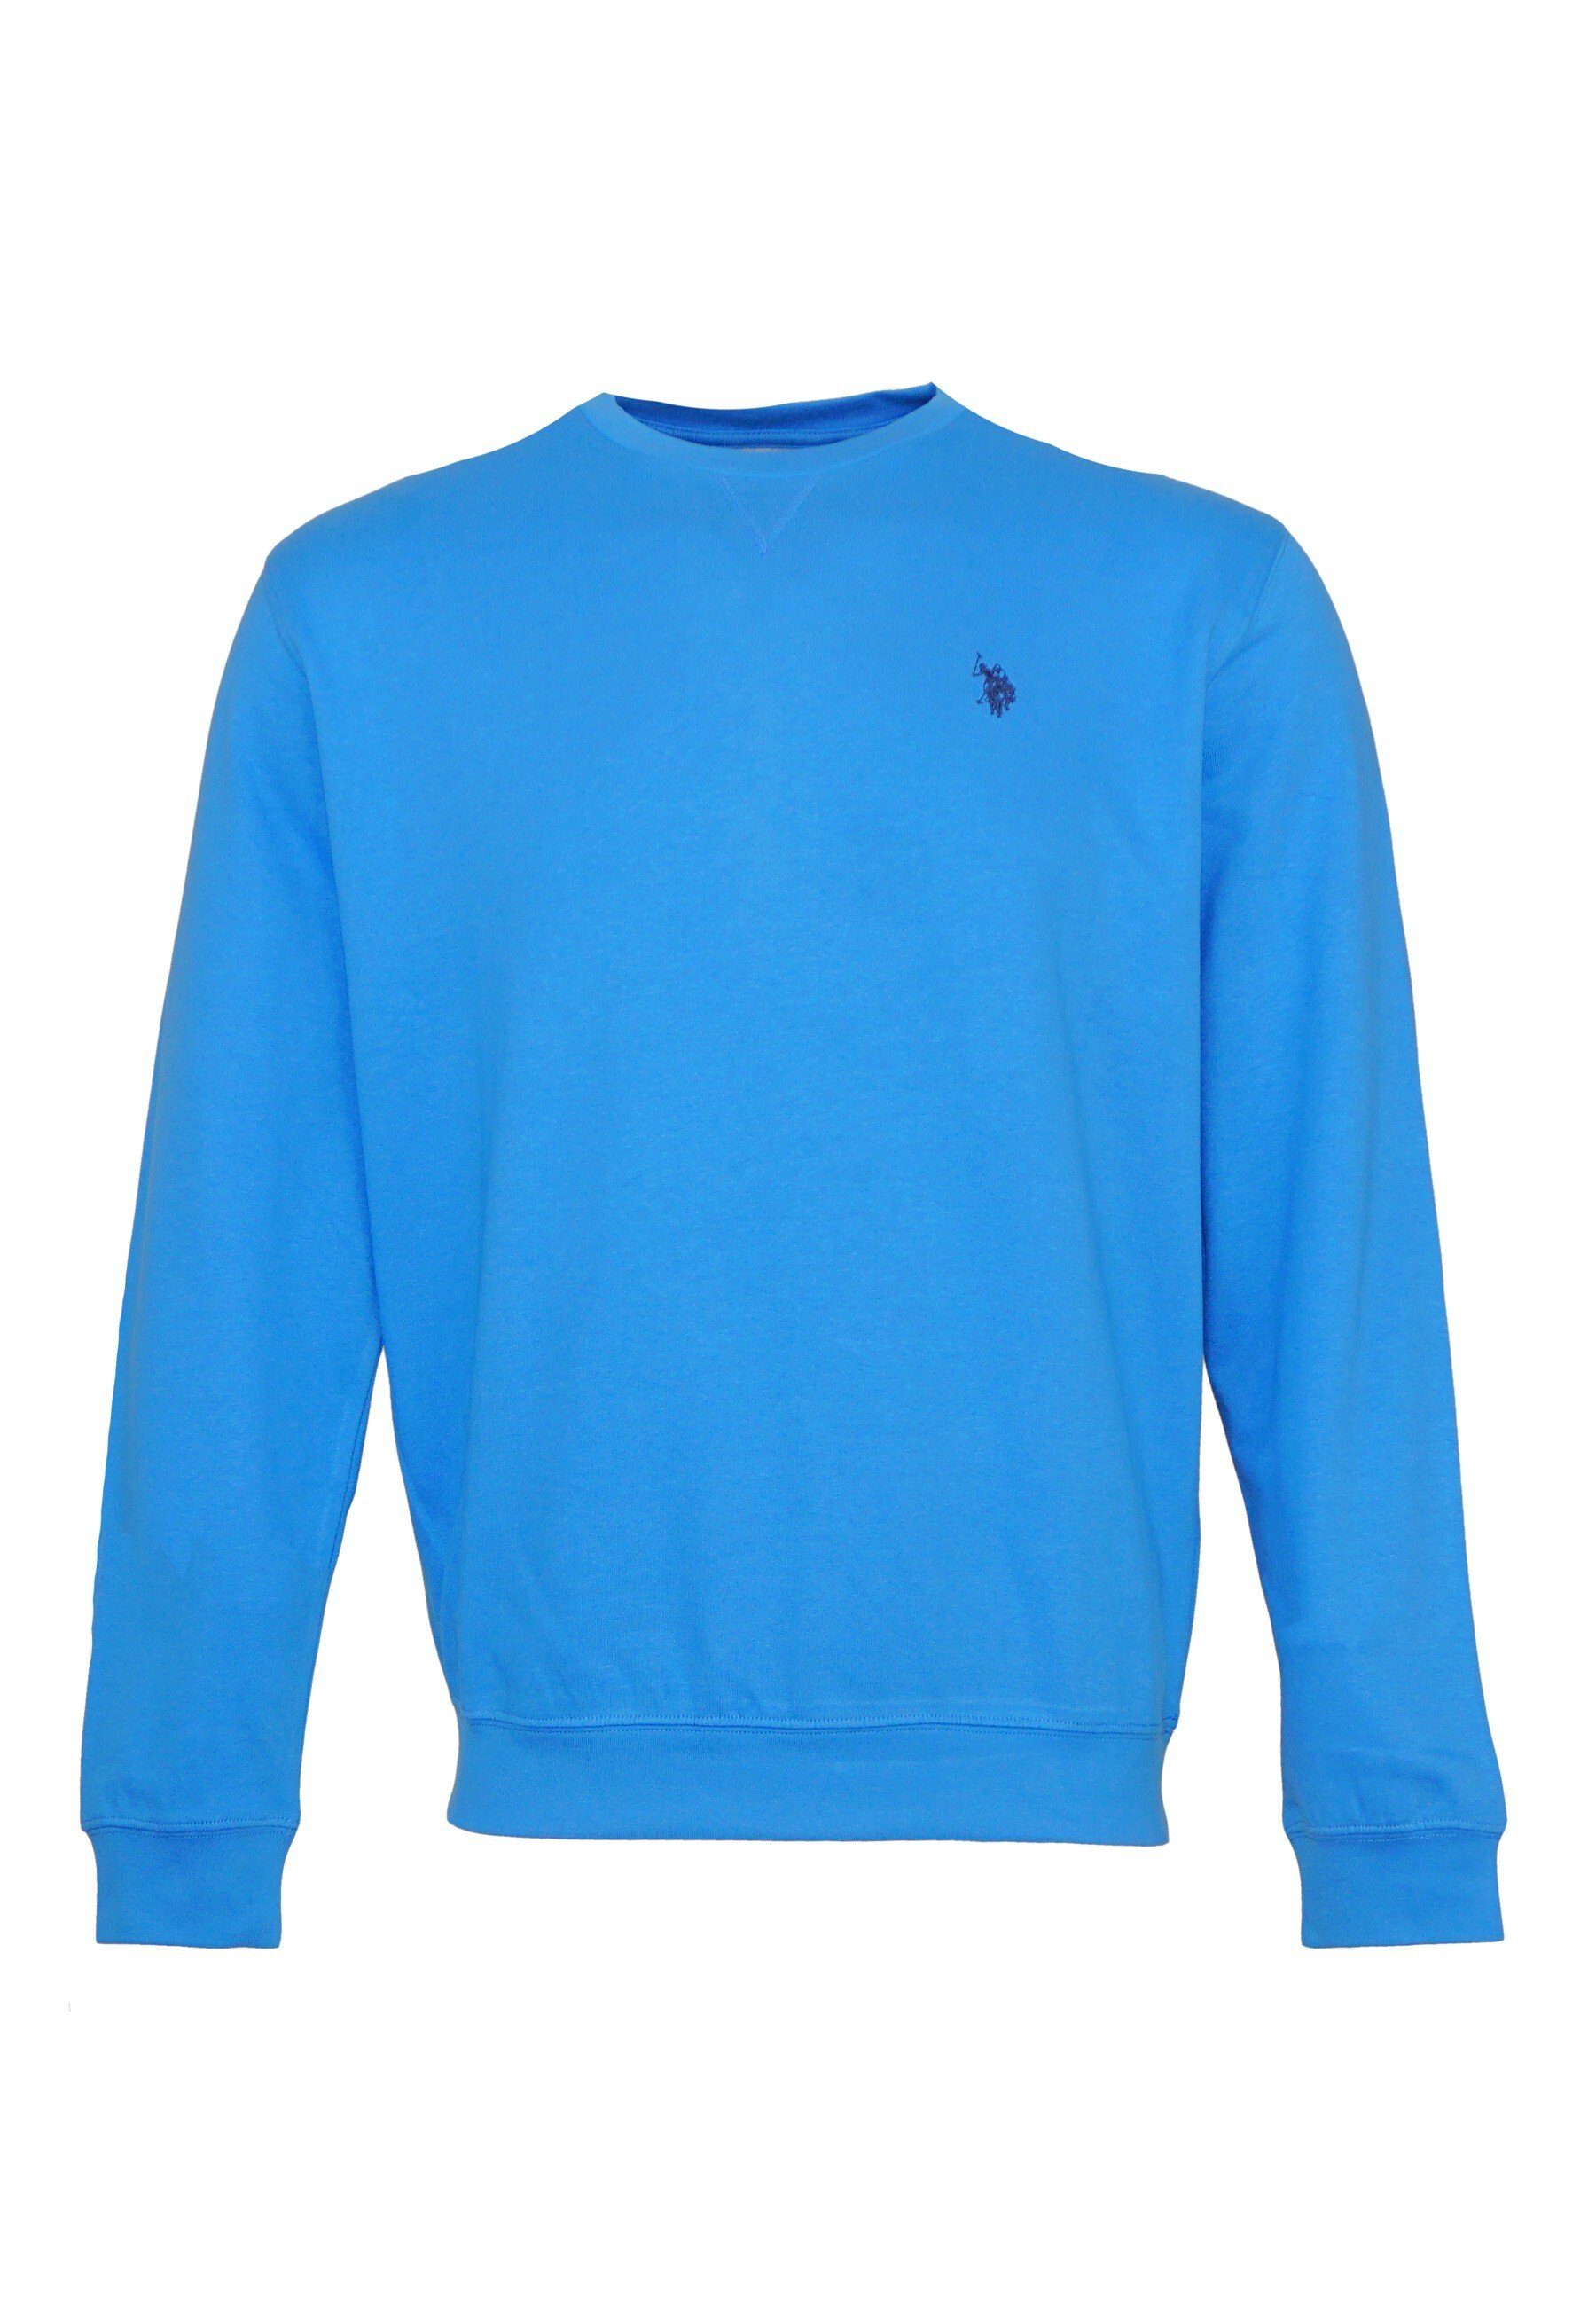 U.S. Polo Assn Sweatshirt Pullover Sweater R-Neck blau